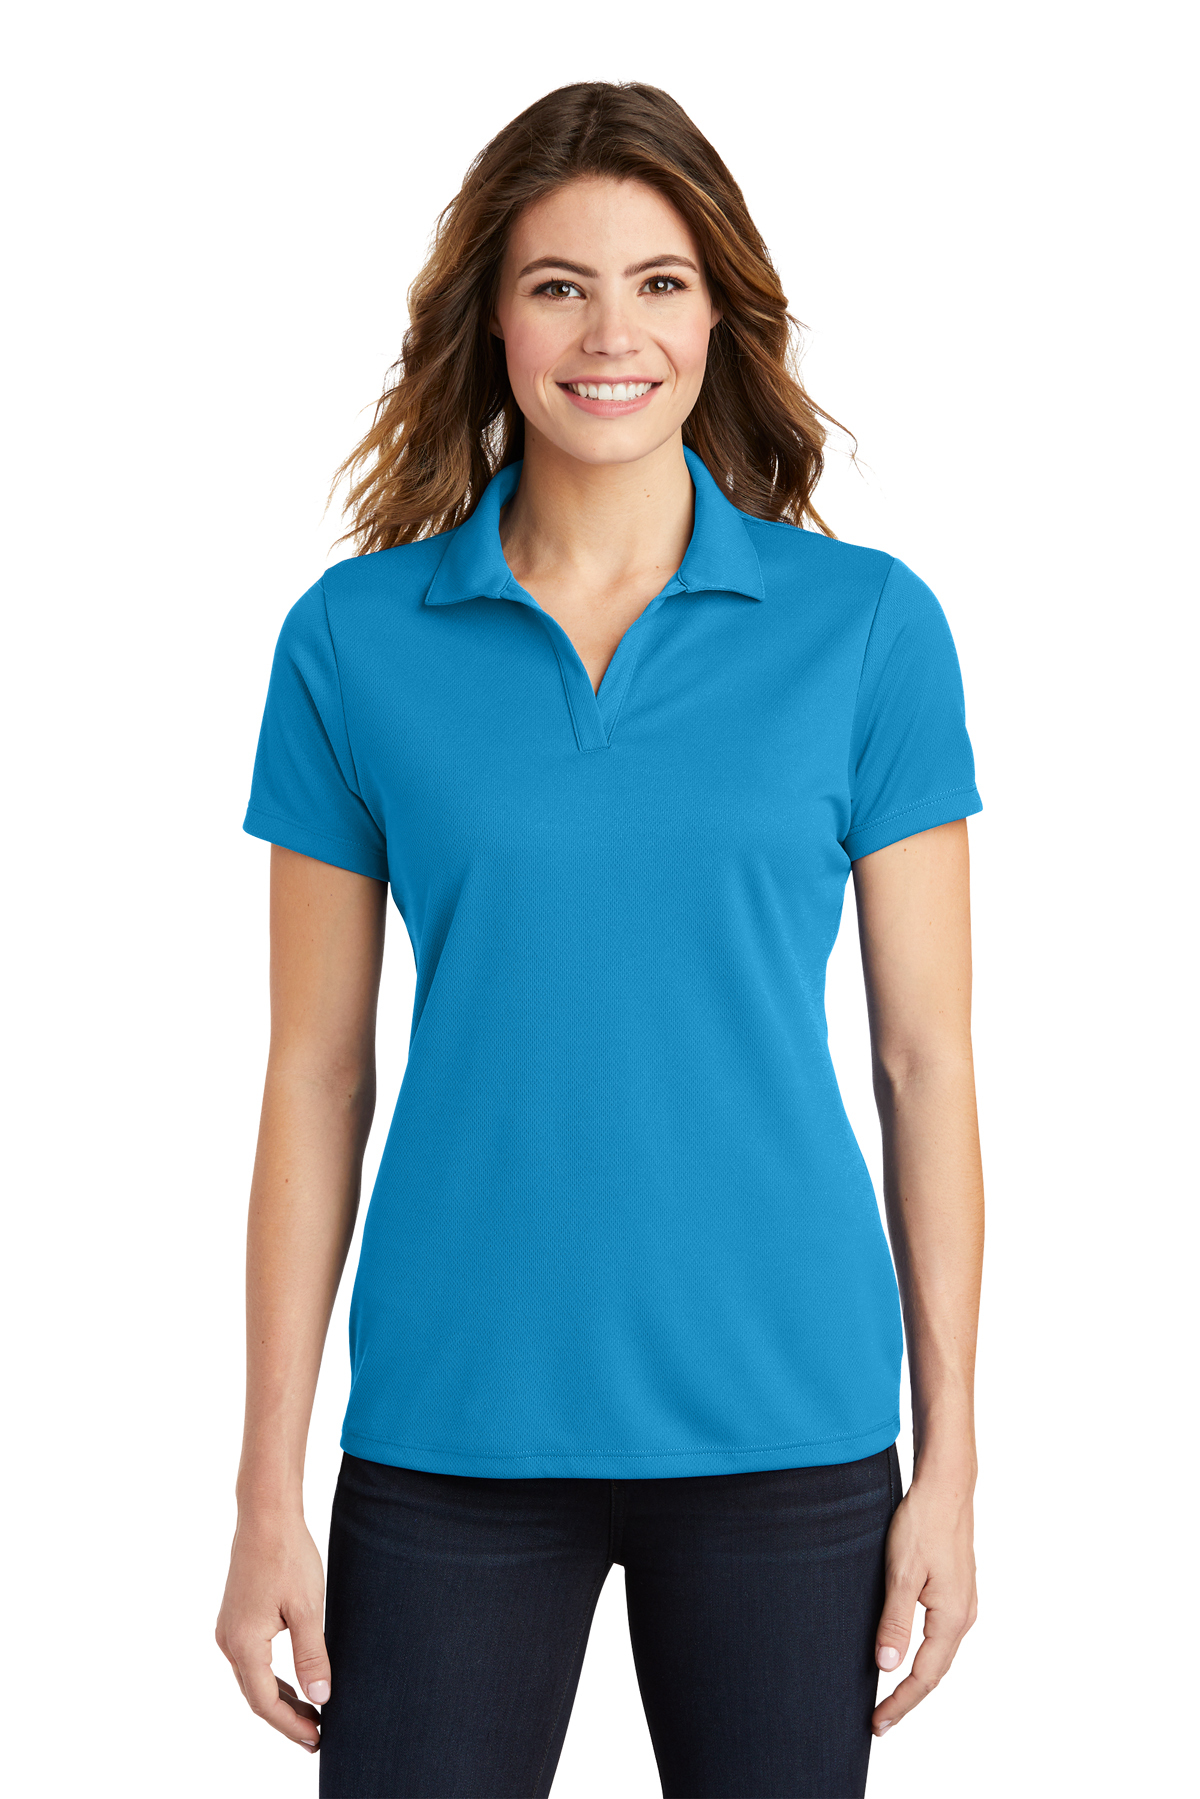 SanMar Wholesale Ladies Snag-Proof Polo Shirt - Royal Blue CS413, Case of 36, Options, Royal Blue, Case of (36) Pieces